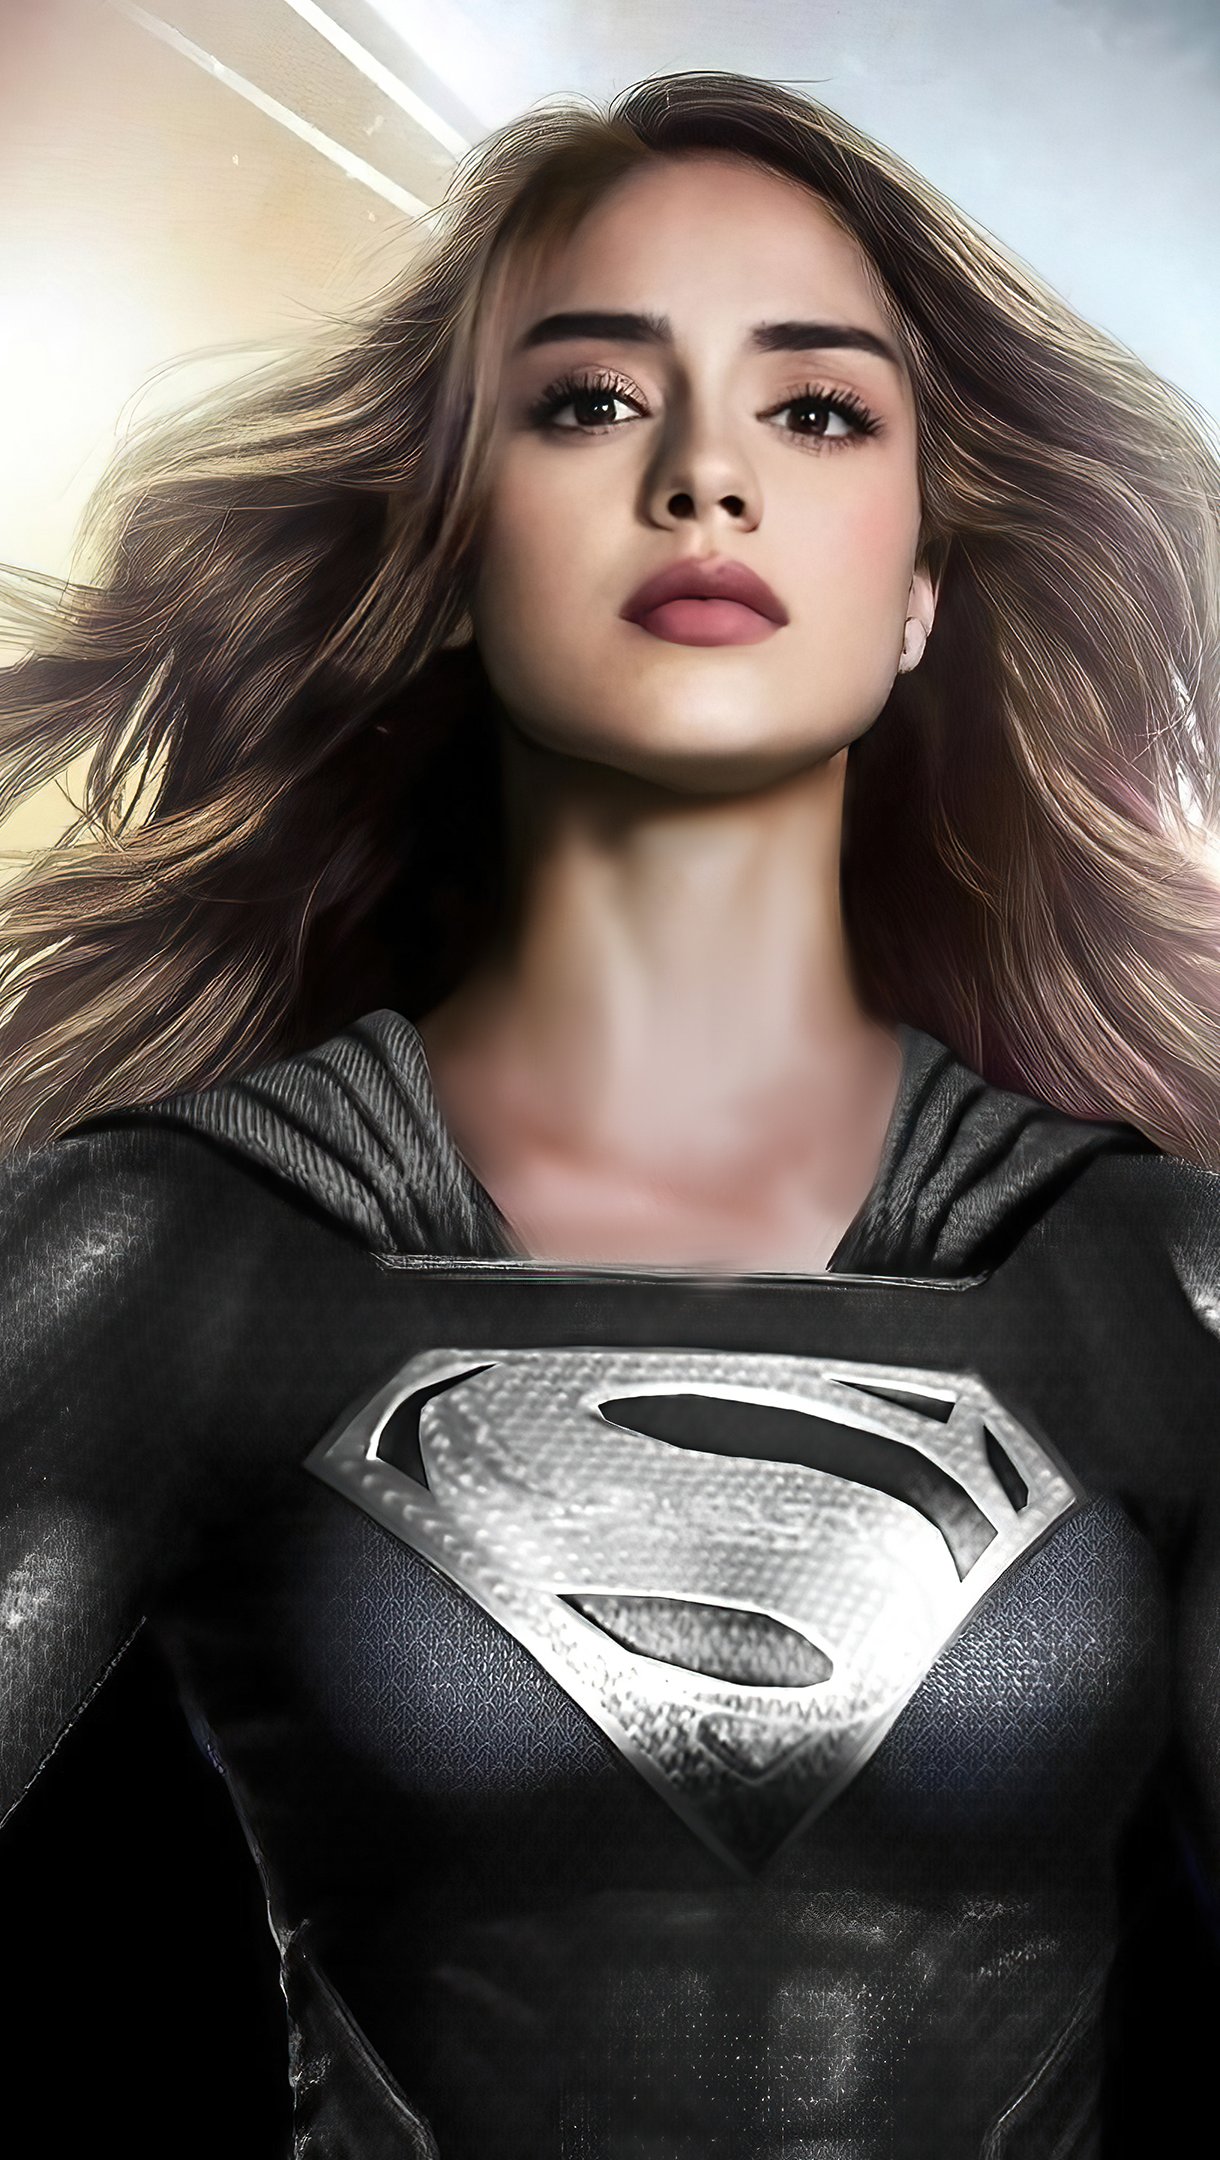 Sasha Calle as Supergirl Fanart Wallpaper 4k Ultra HD